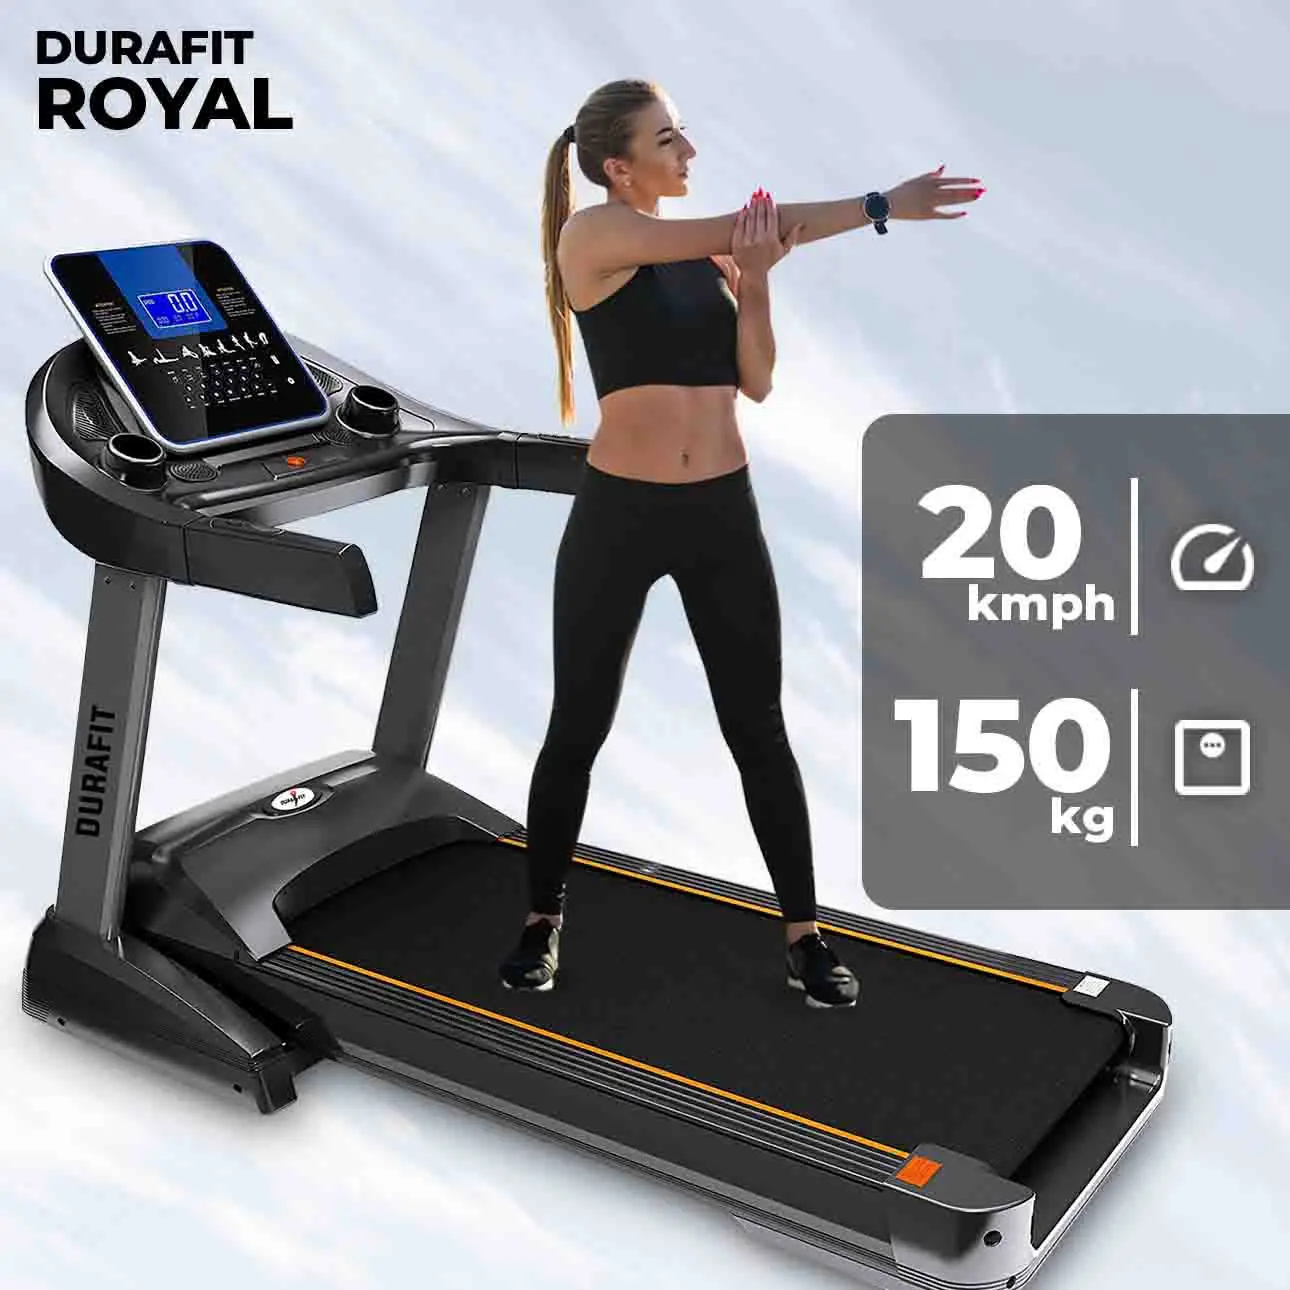 Durafit Royal Treadmill